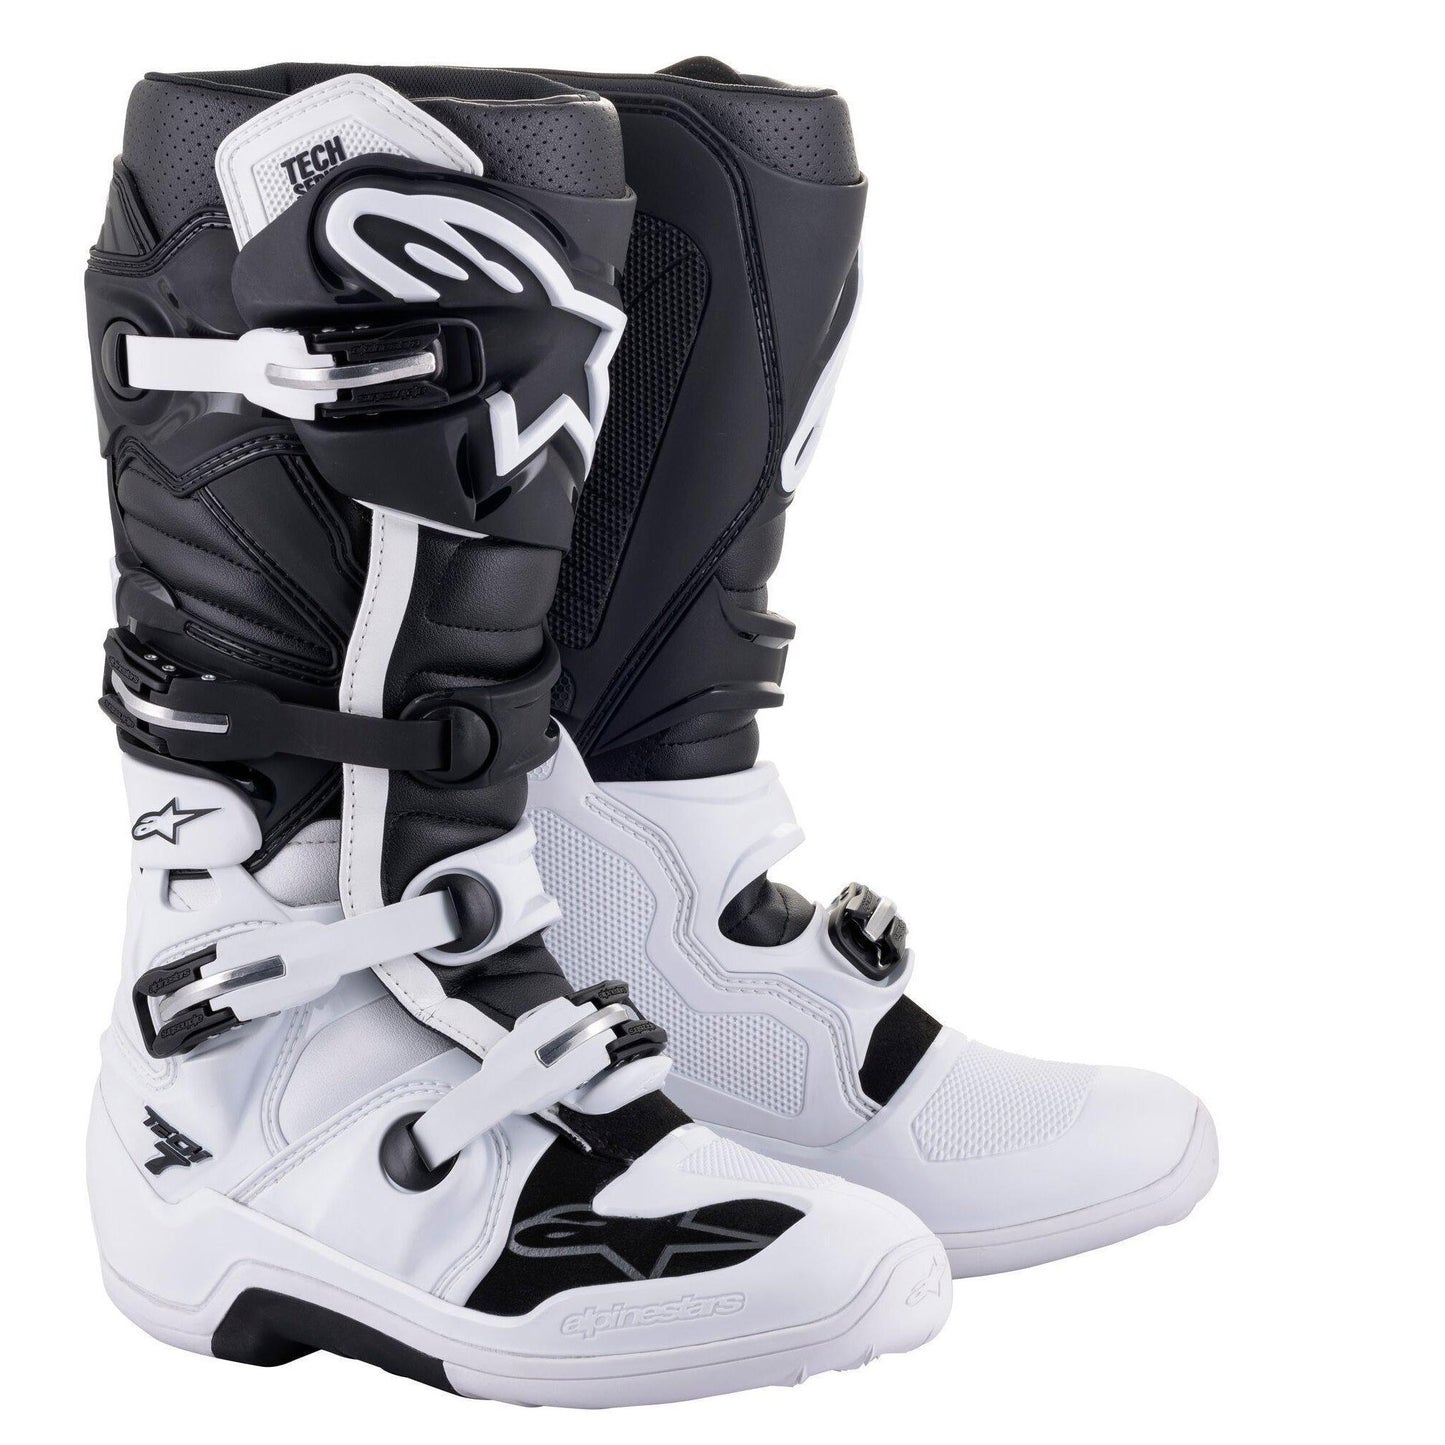 Alpinestars Tech 7 Motorcross Boots - White/Black (21)